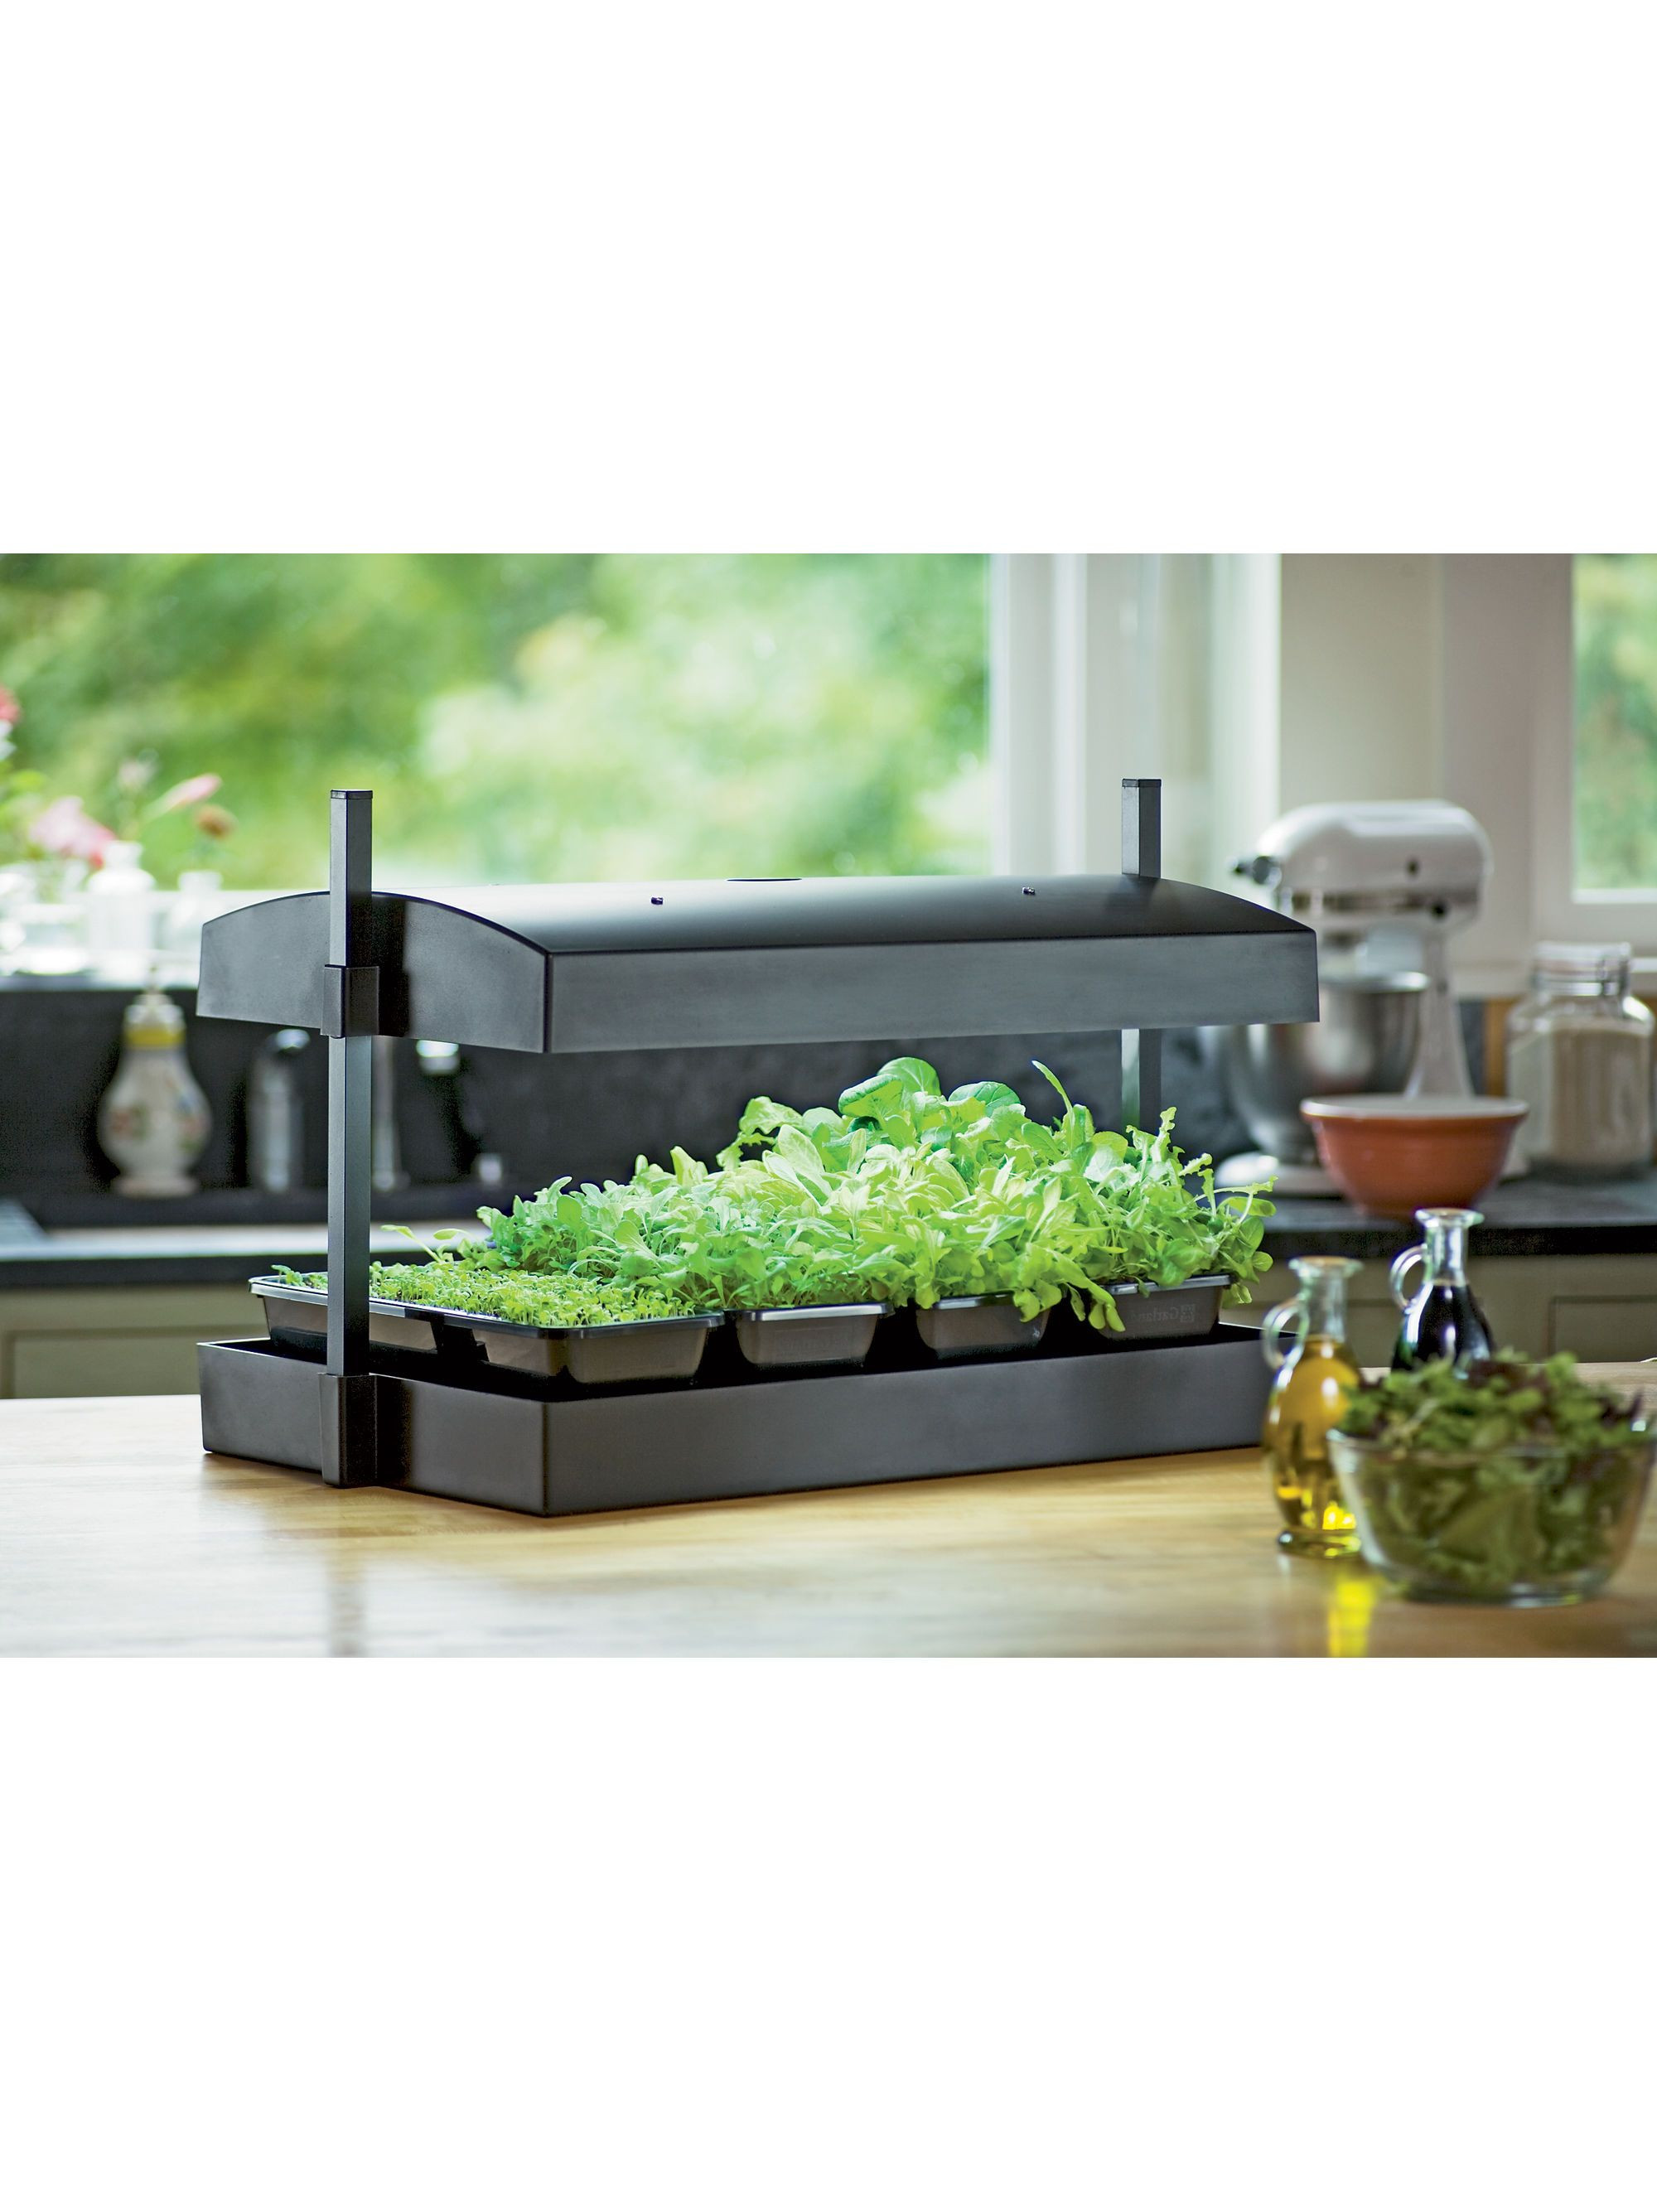 Best ideas about DIY Indoor Herb Garden With Grow Light
. Save or Pin Indoor Herb Garden Kit My Greens Light Garden Now.